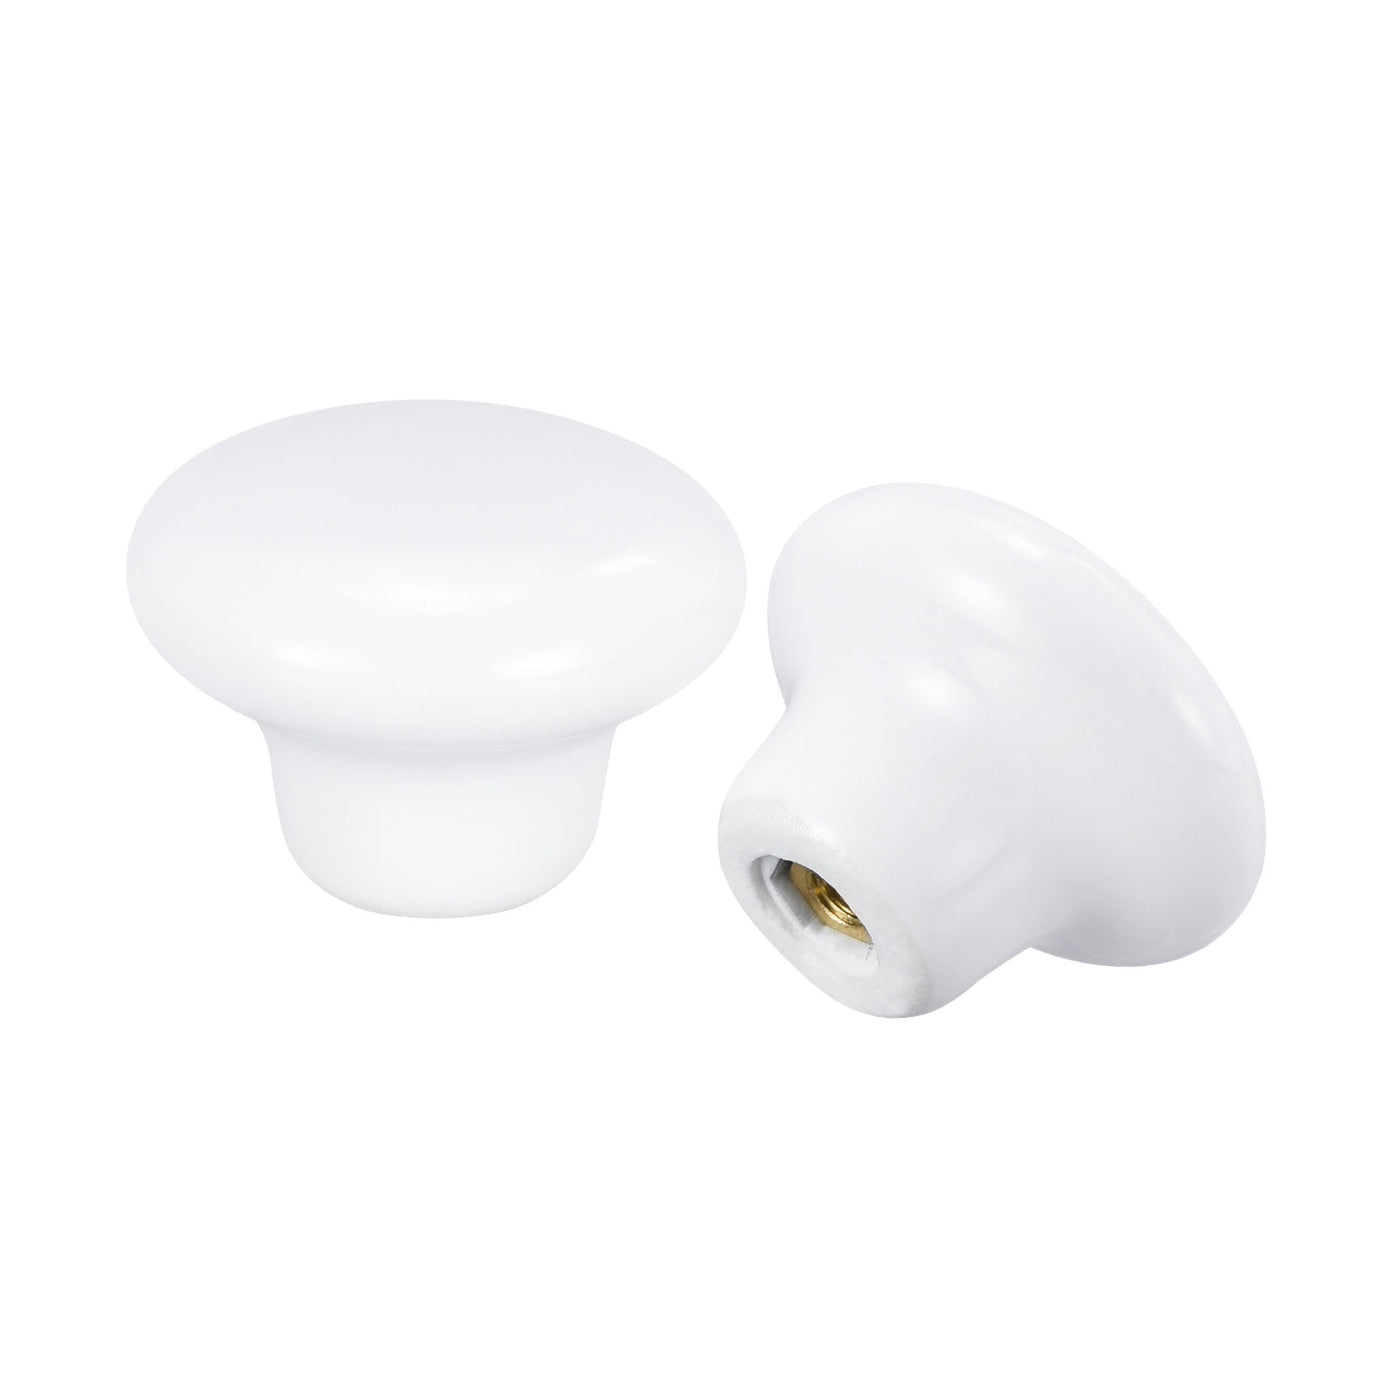 uxcell Uxcell 32x24mm Ceramic Drawer Knobs, 10pcs Mushroom Shape Door Pull Handles White